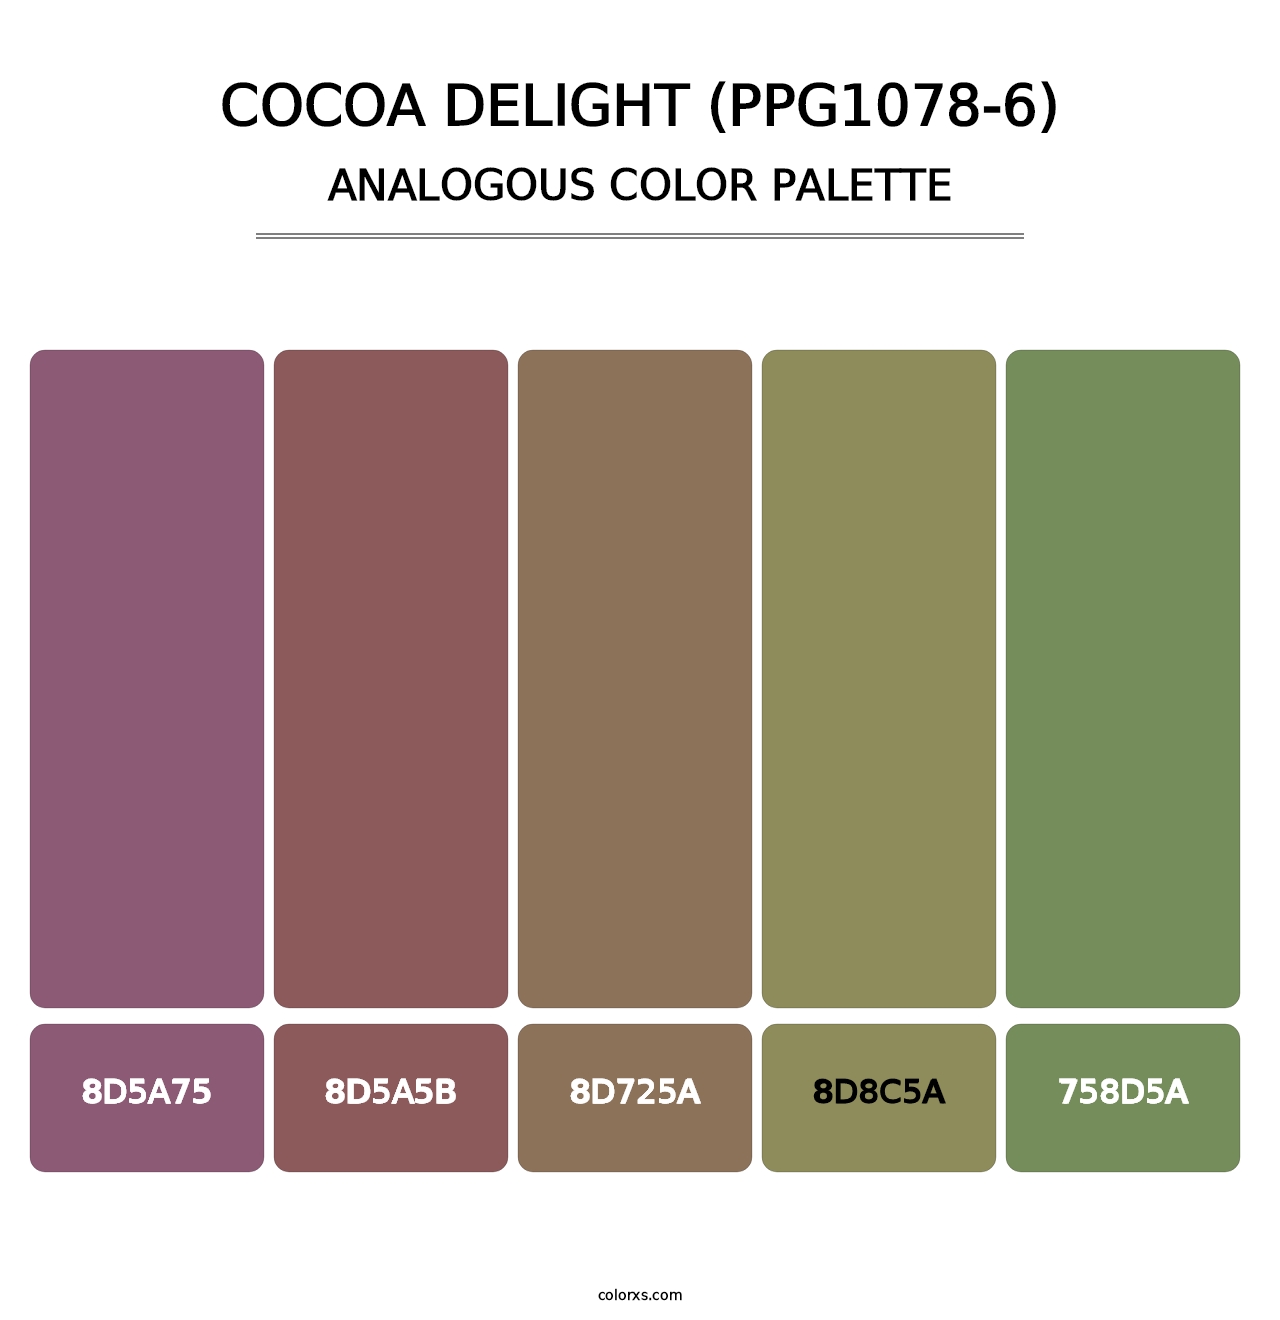 Cocoa Delight (PPG1078-6) - Analogous Color Palette